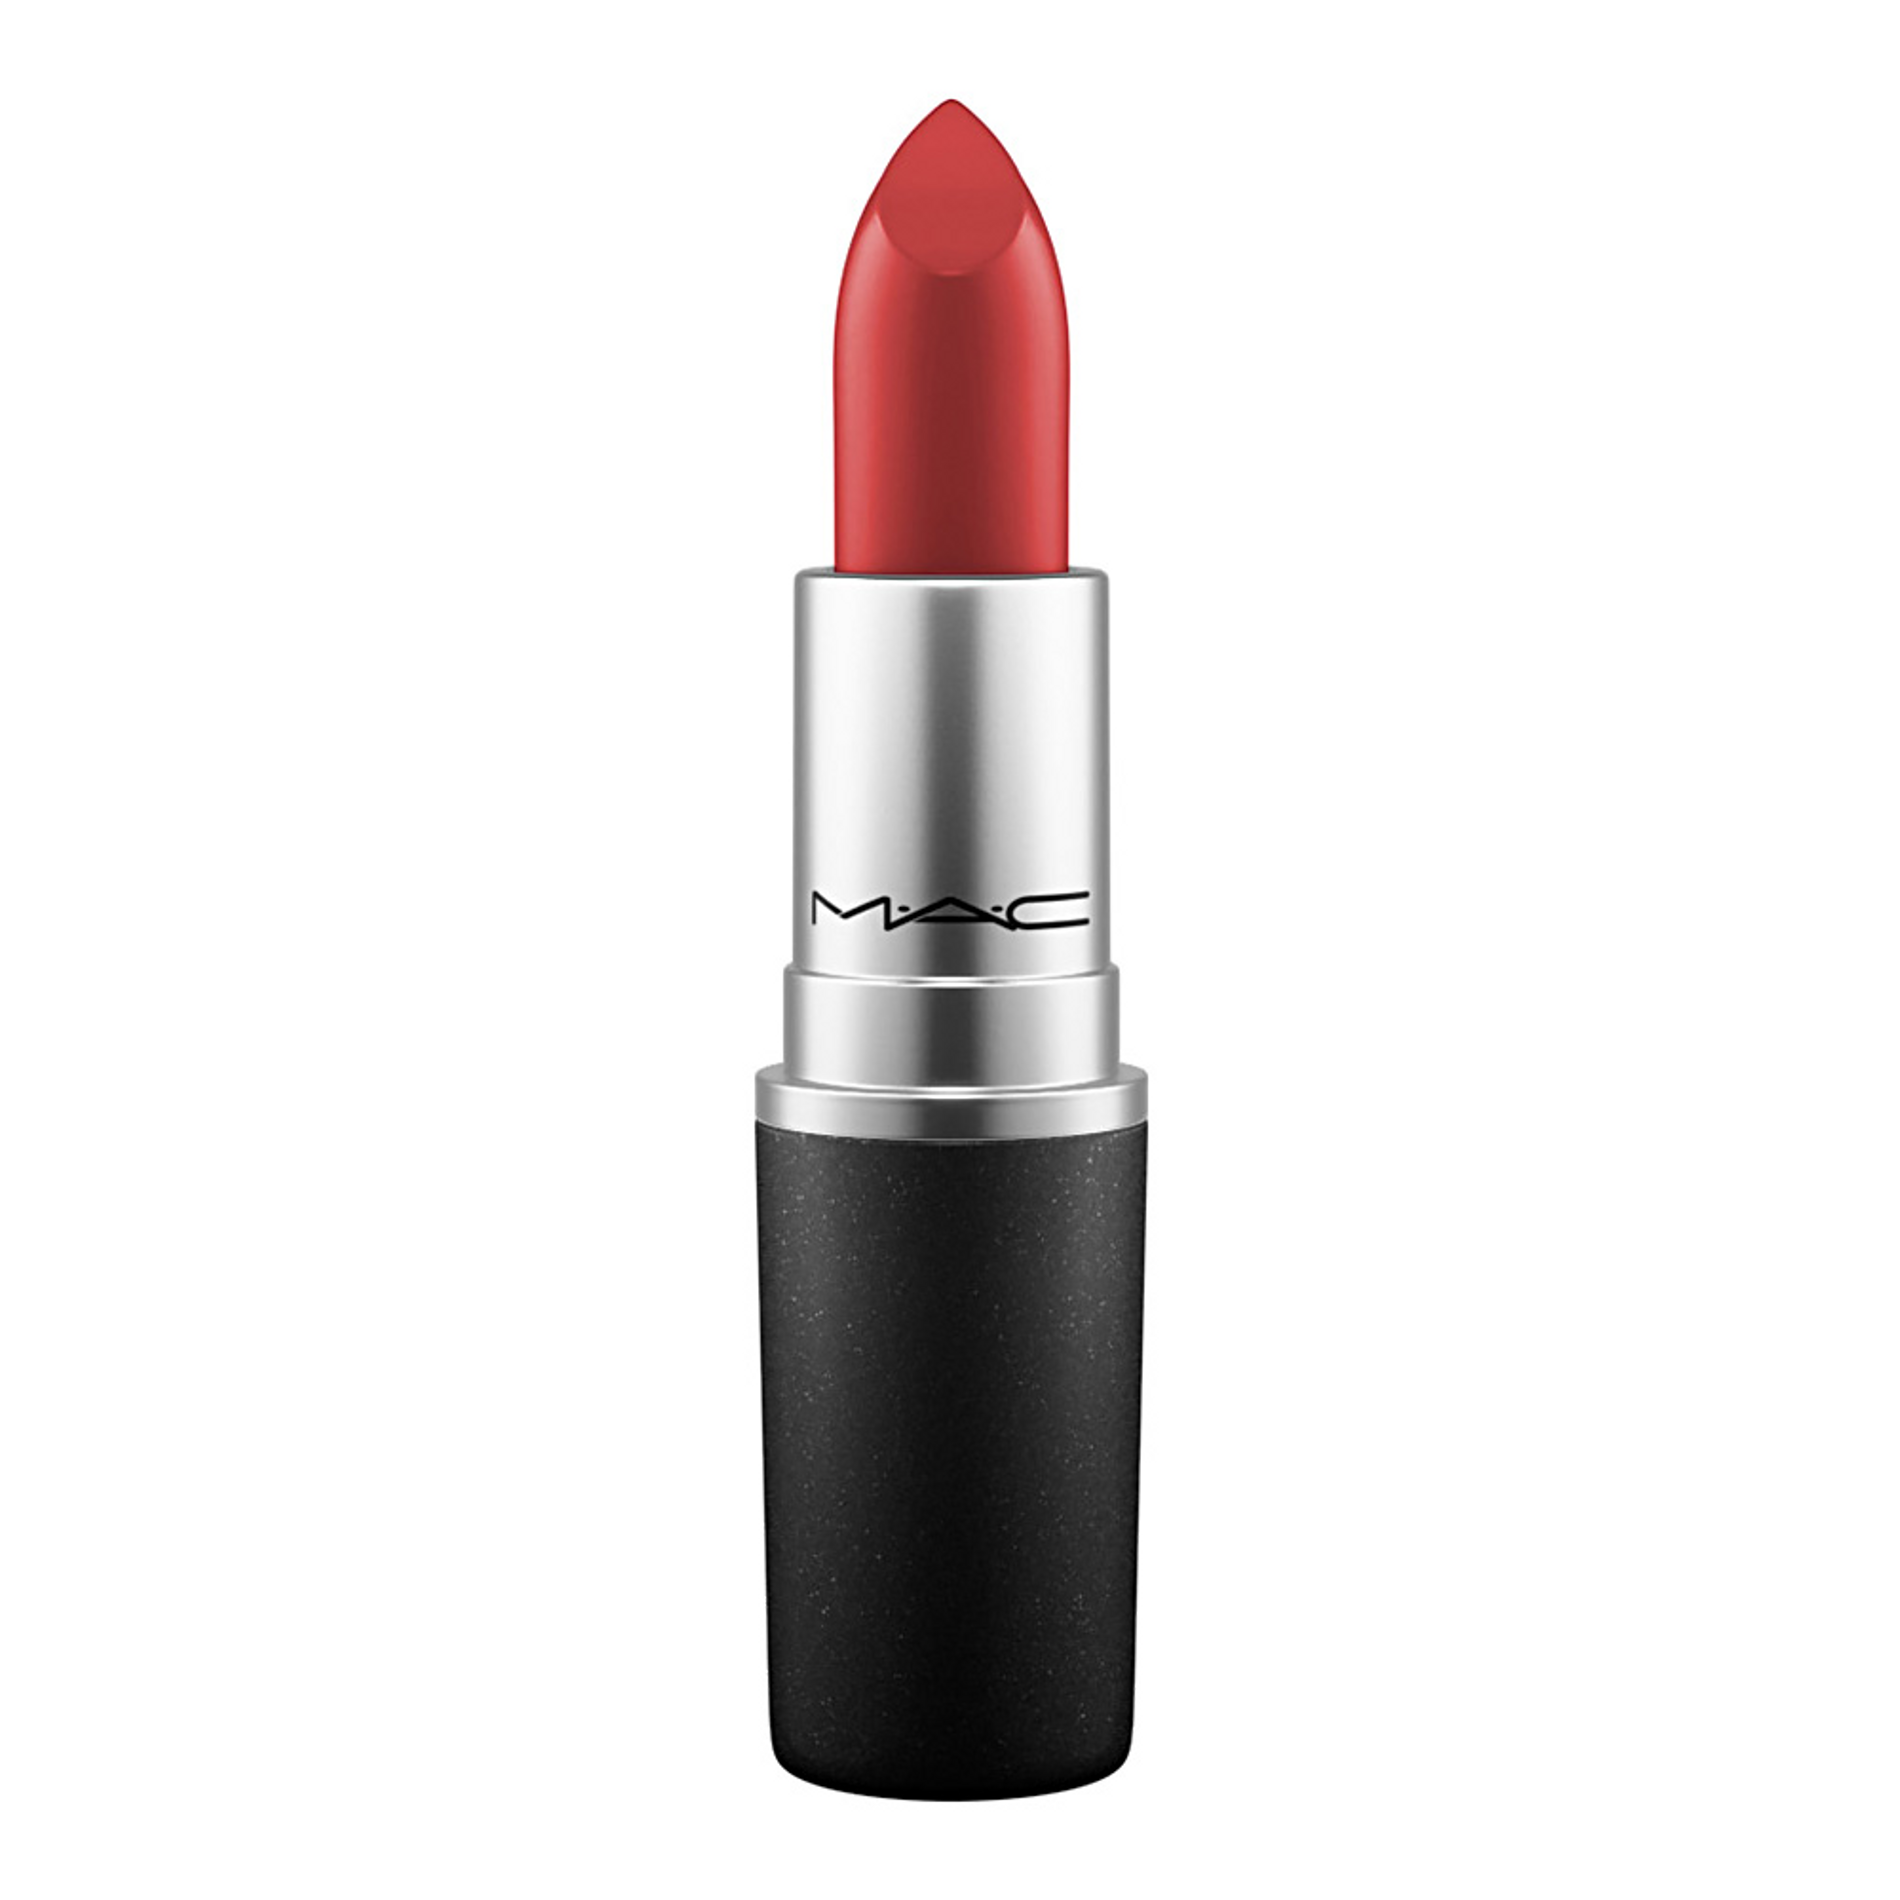 son-thoi-mac-amplified-creme-lipstick-3g-10